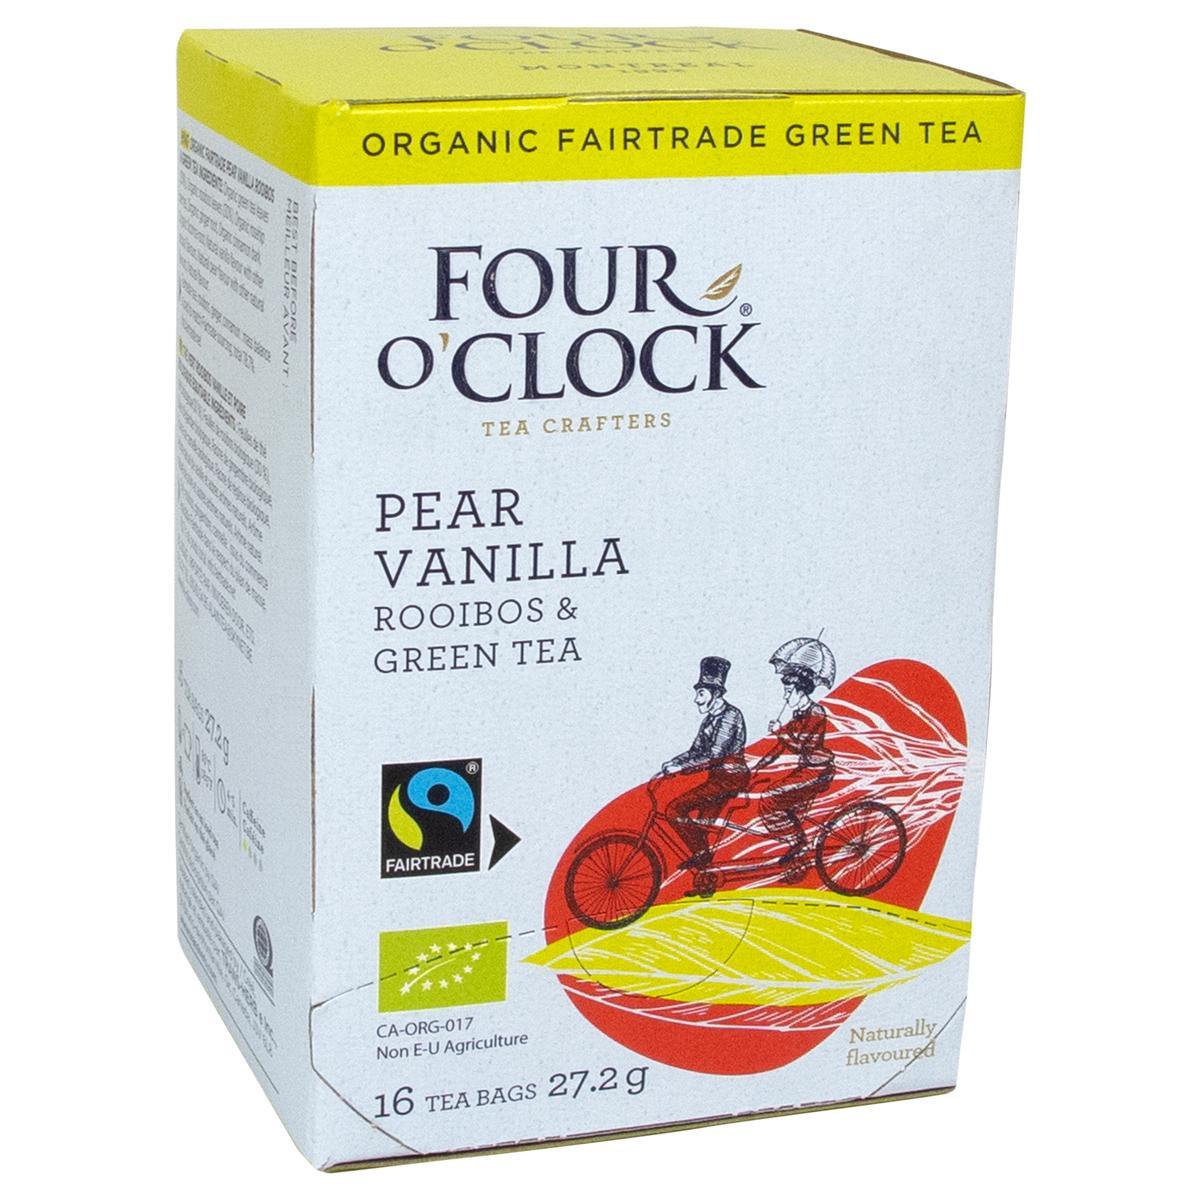 Four O’Clock's Four O'Clock GREEN TEA & ROOIBOS, VANILLA AND PEAR '